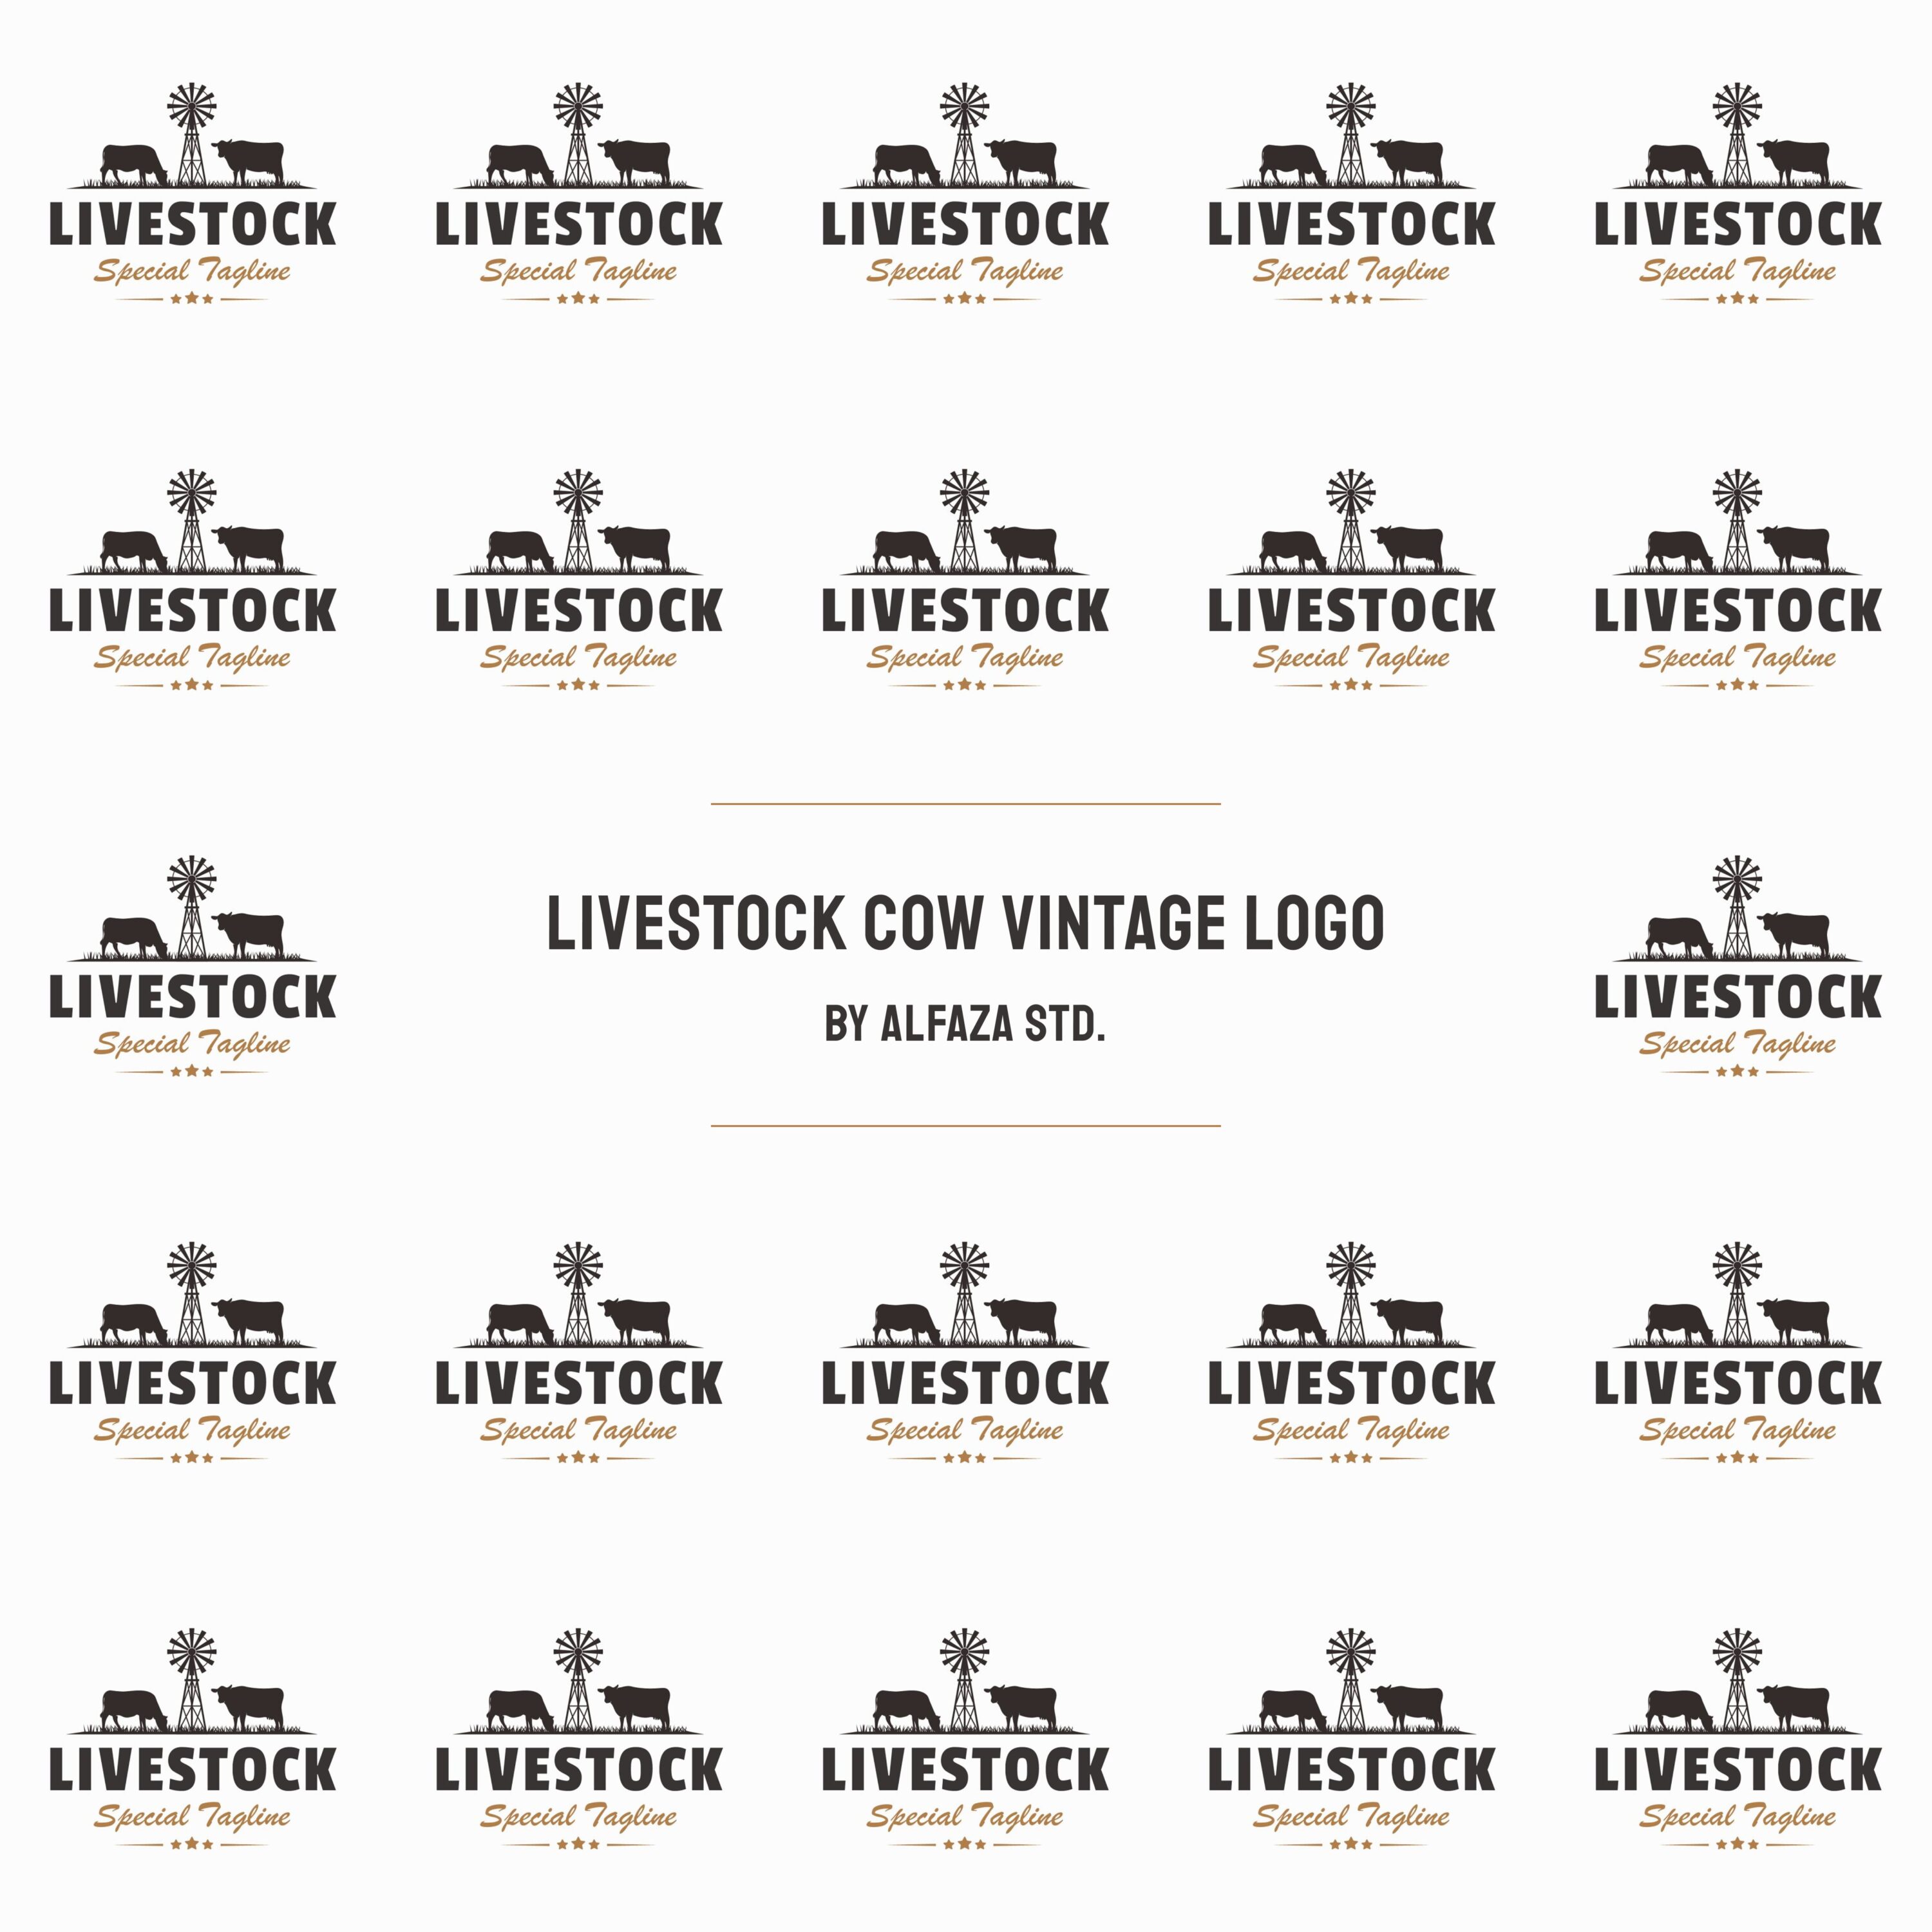 Livestock cow vintage logo.